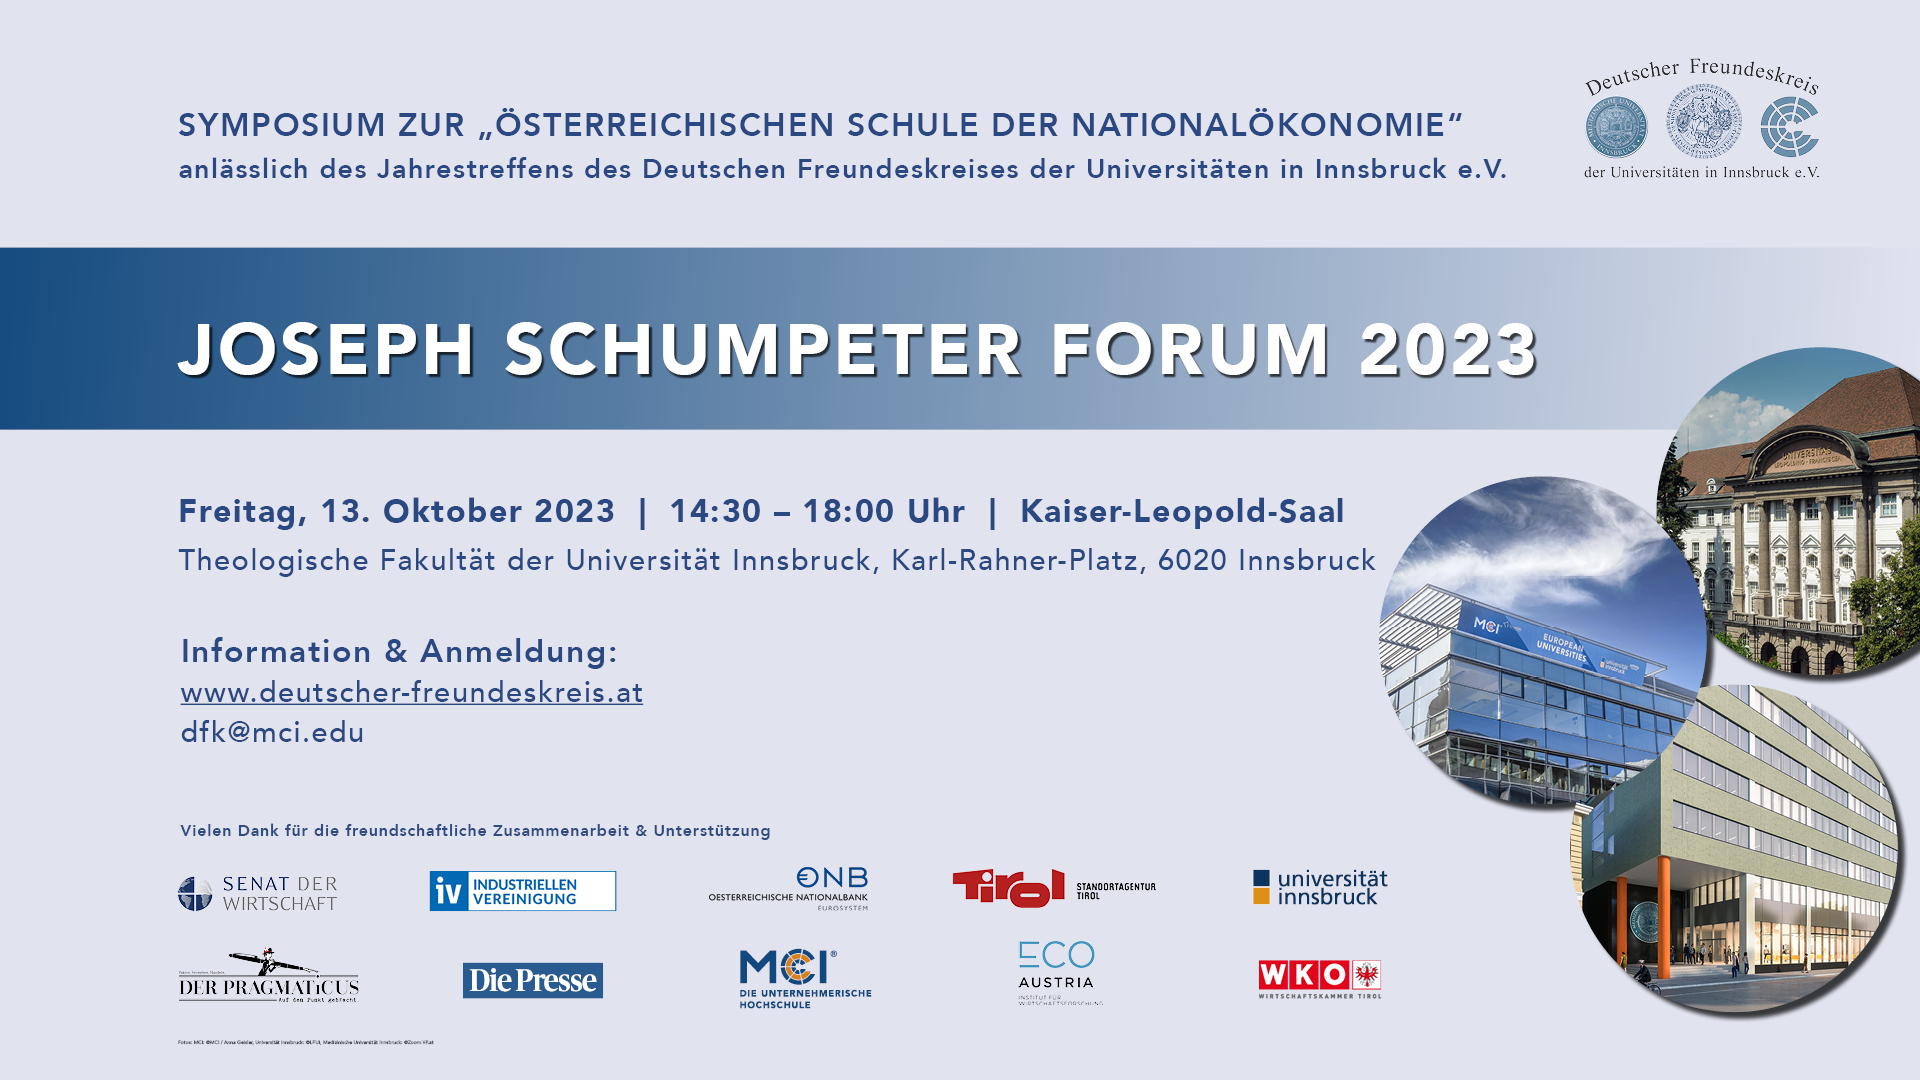 Joseph Schumpeter Forum 2023